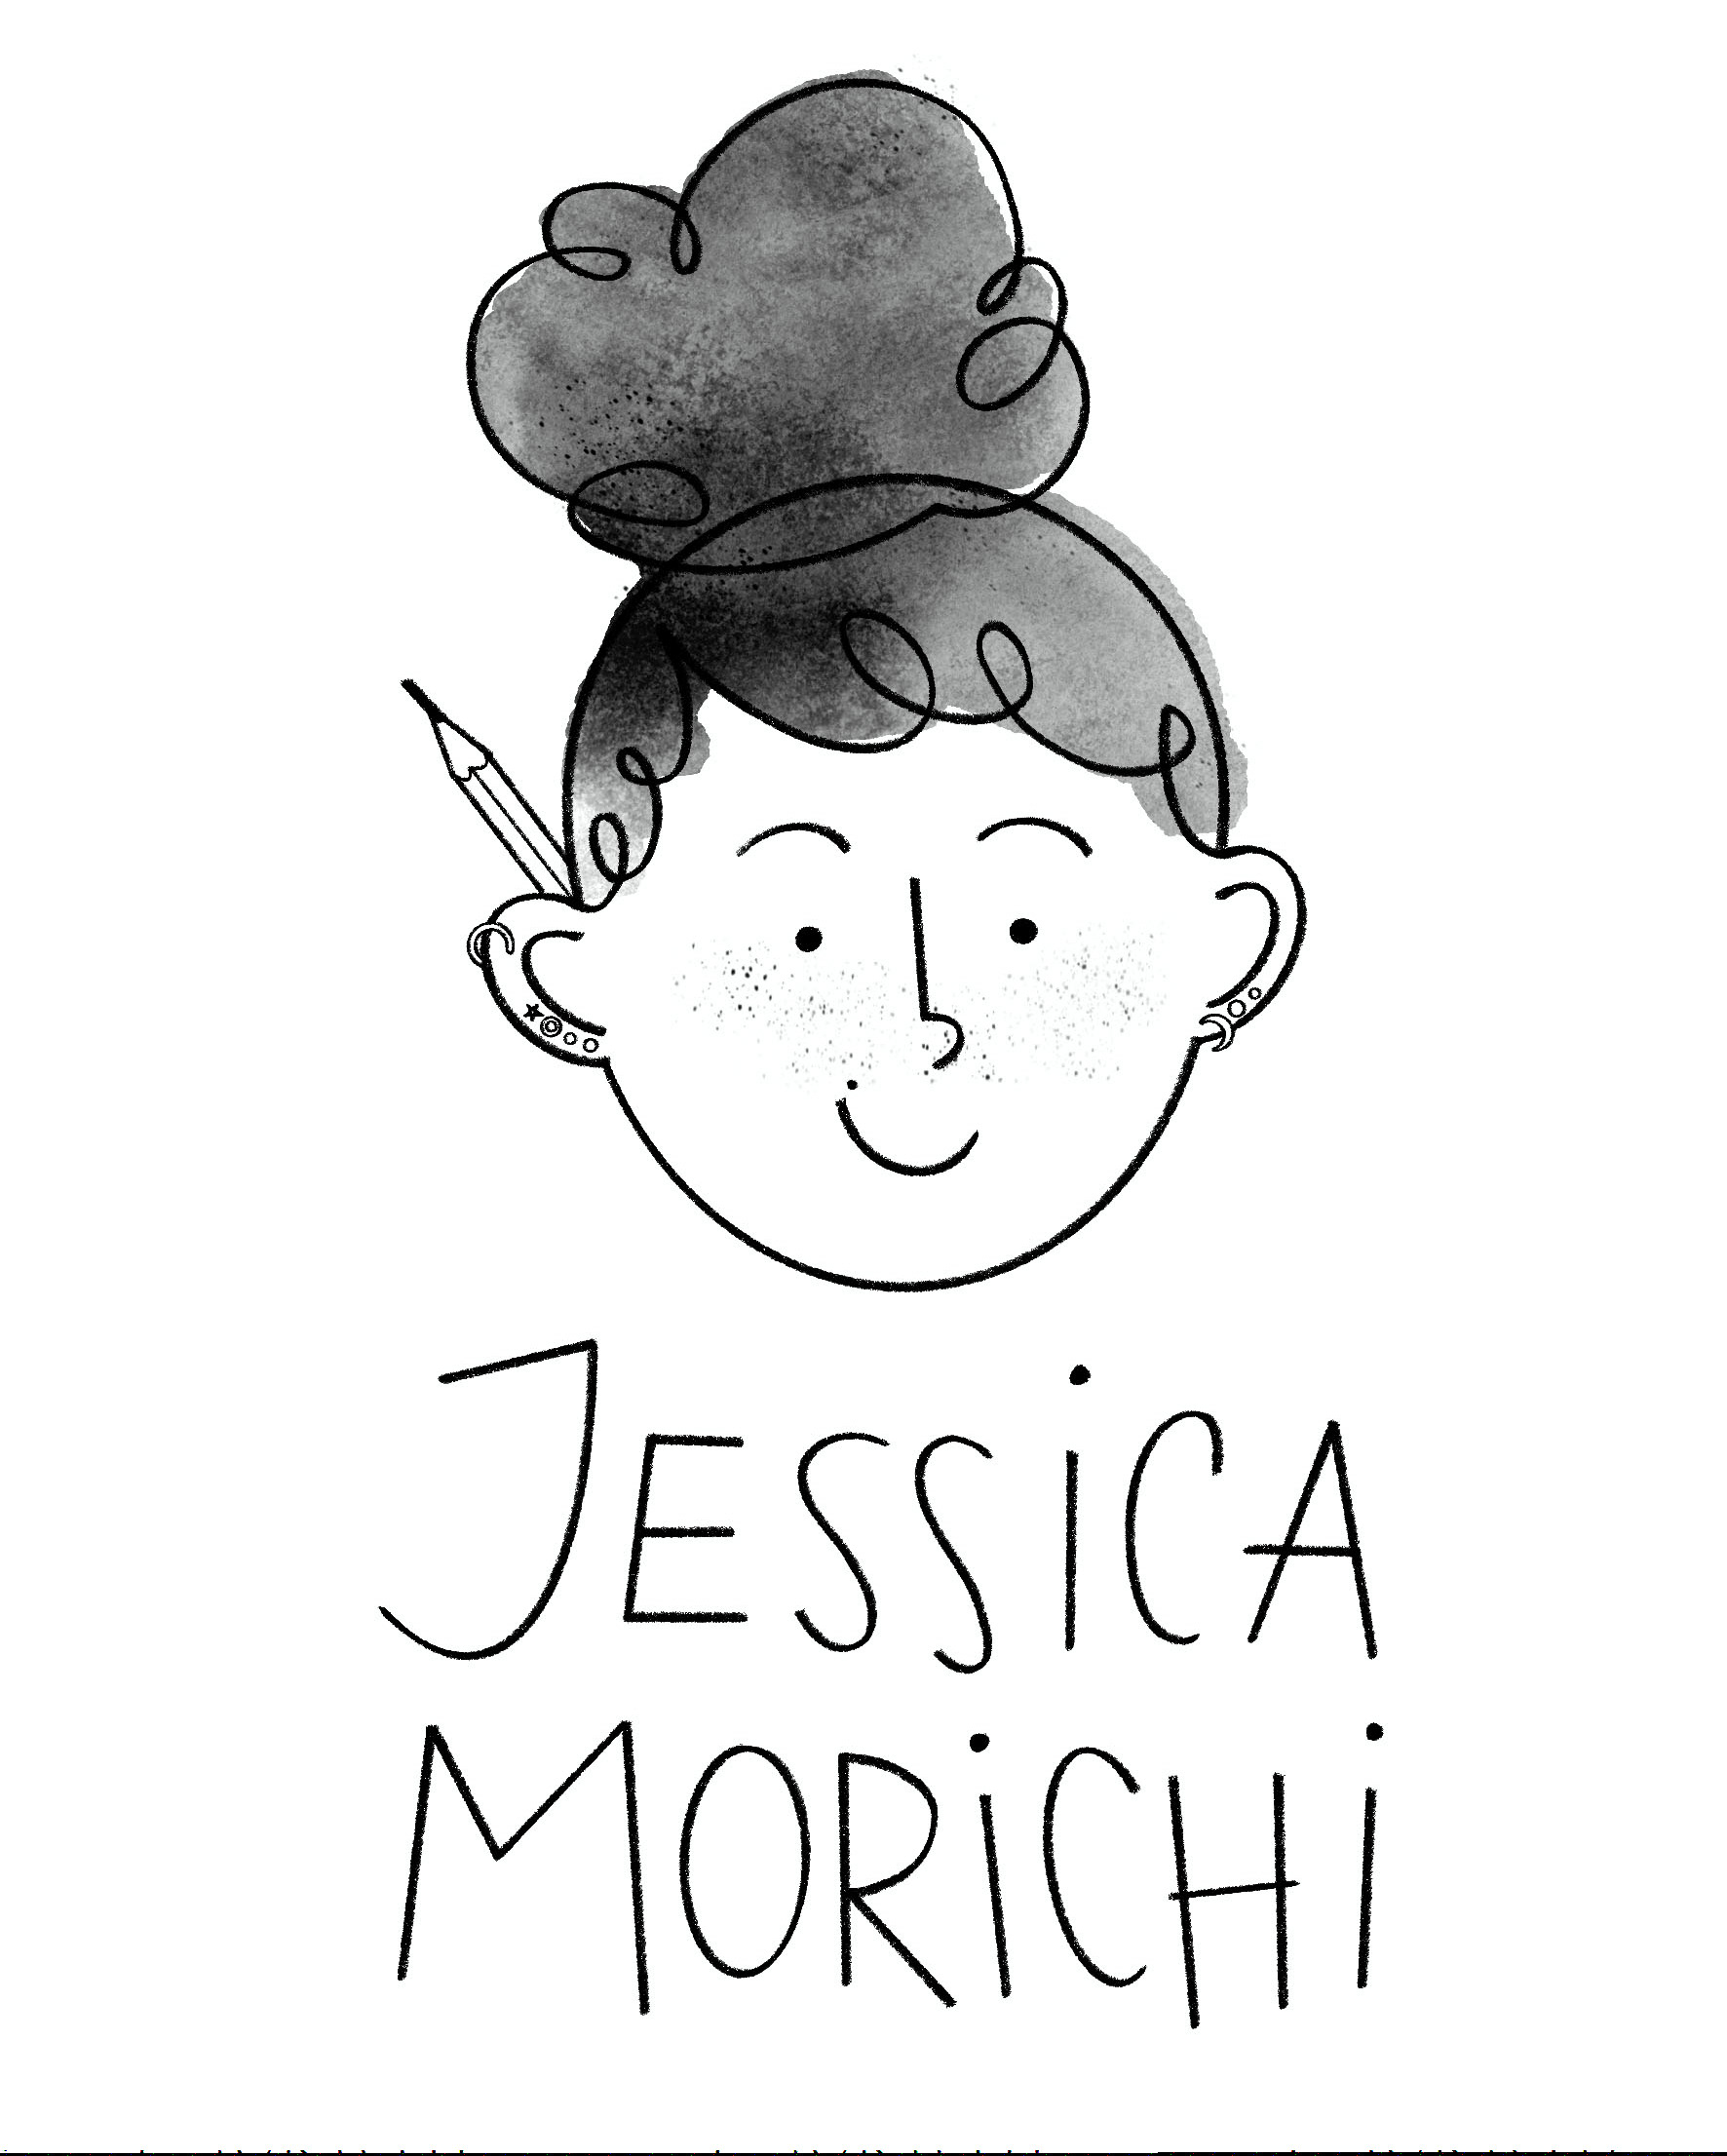 Jessica Morichi